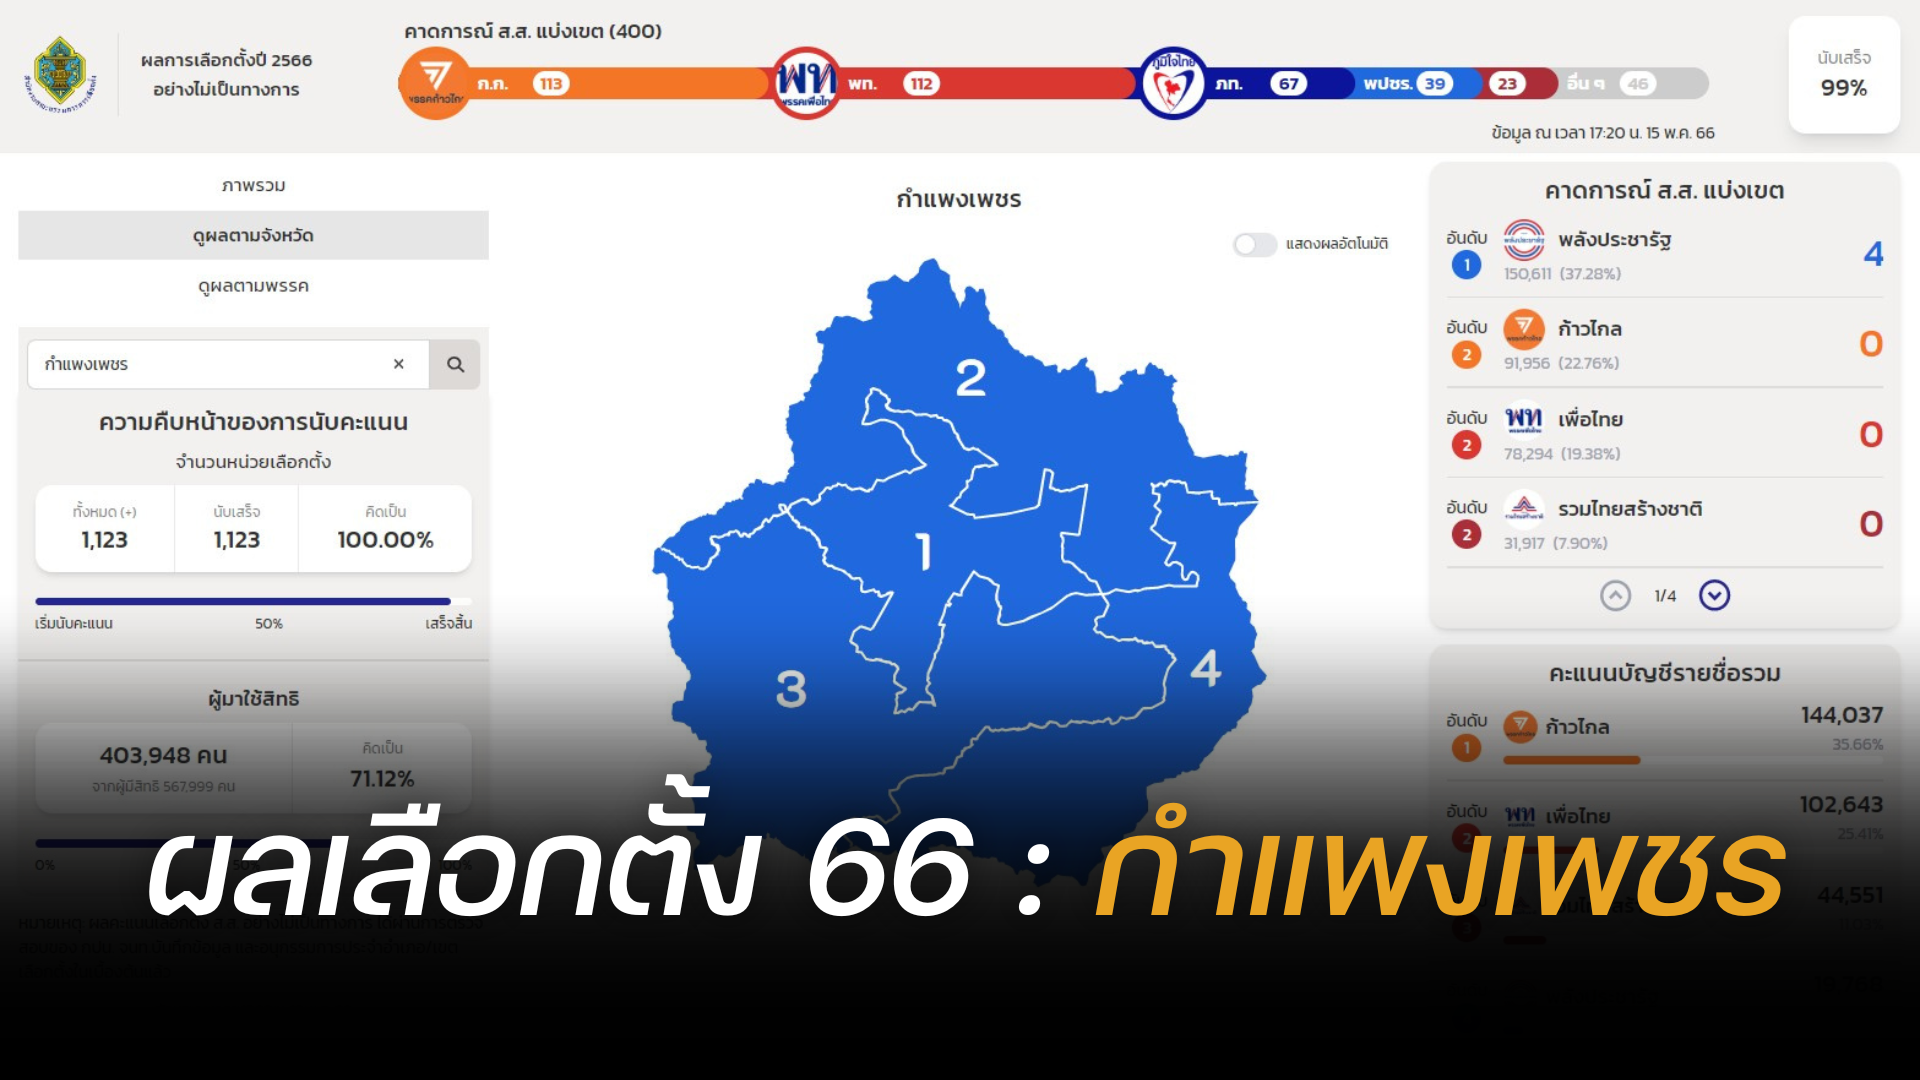 Thailand election 2566 Kamphaeng Phet